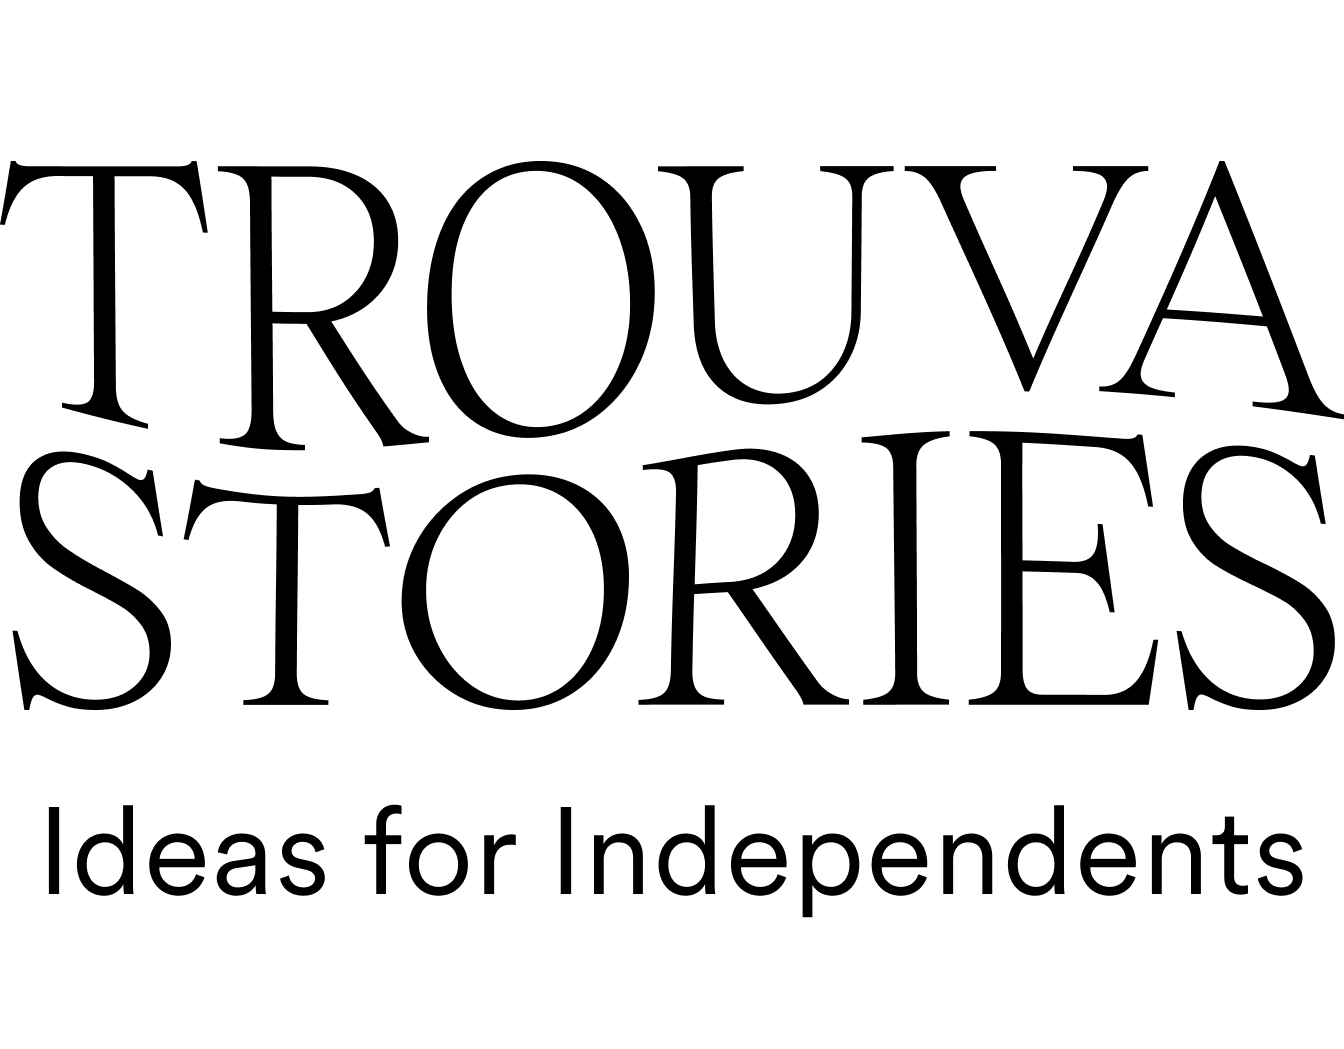 Trouva: Trouva Stories